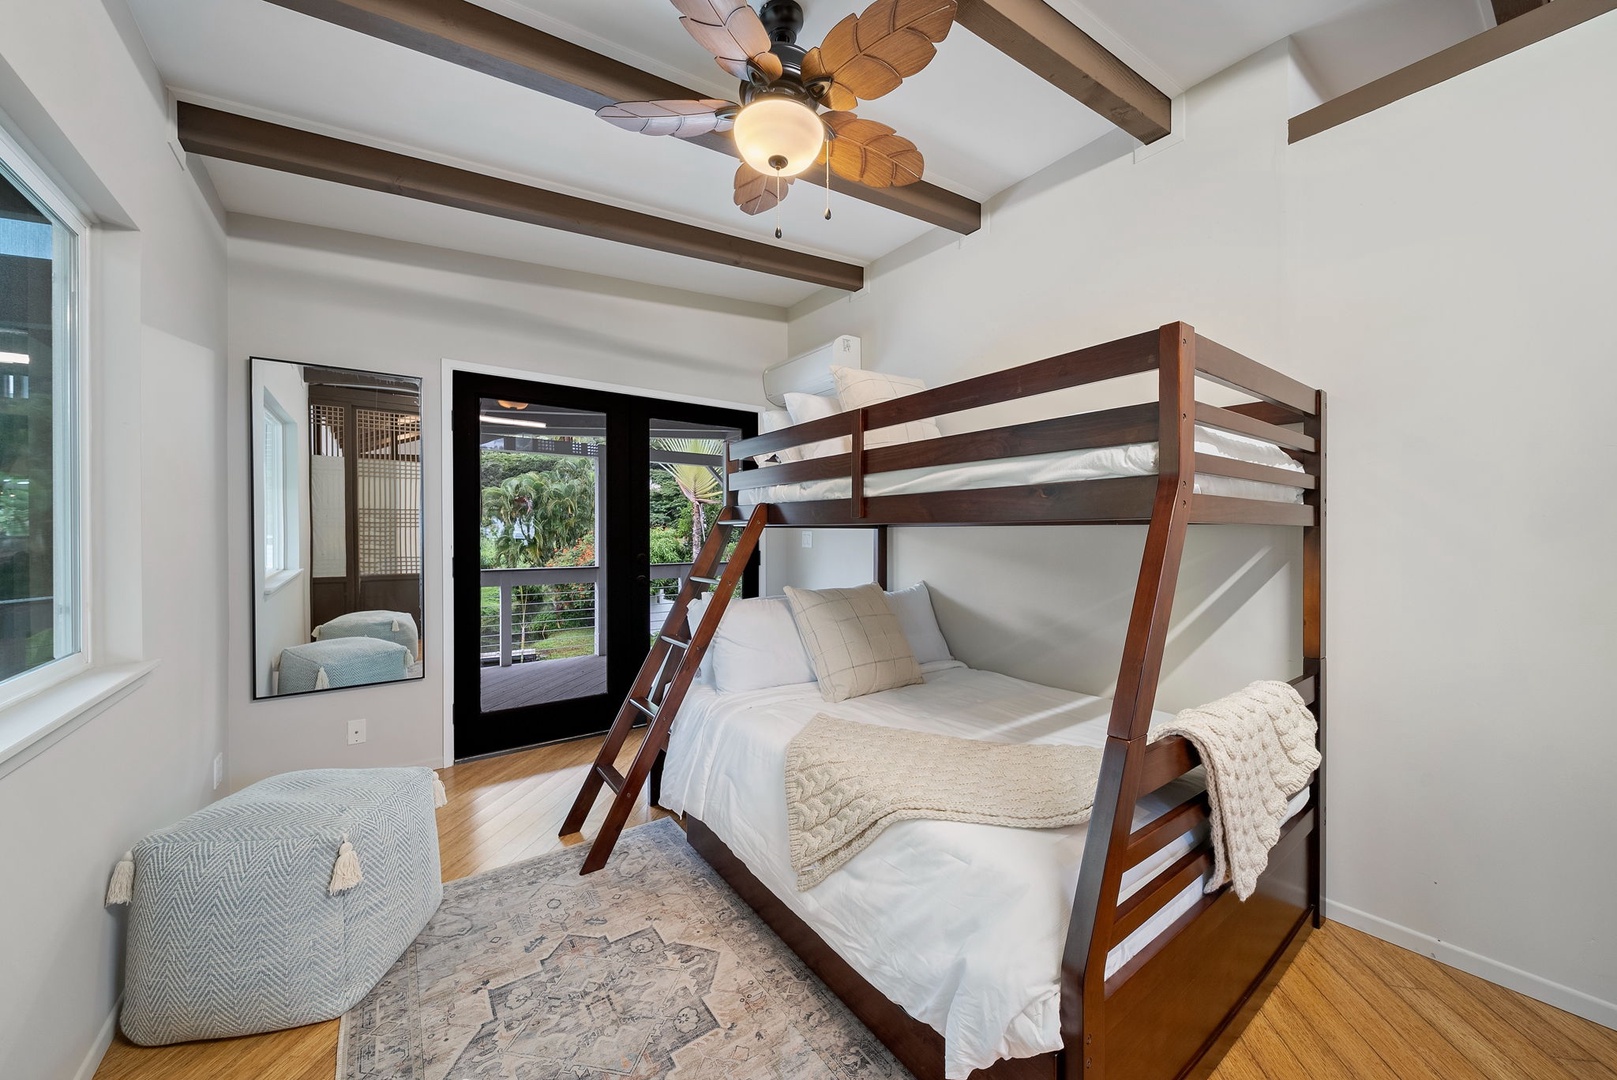 Kaaawa Vacation Rentals, Kualoa Ohia - Comfy Twin over Full Bunk beds with ceiling fan.